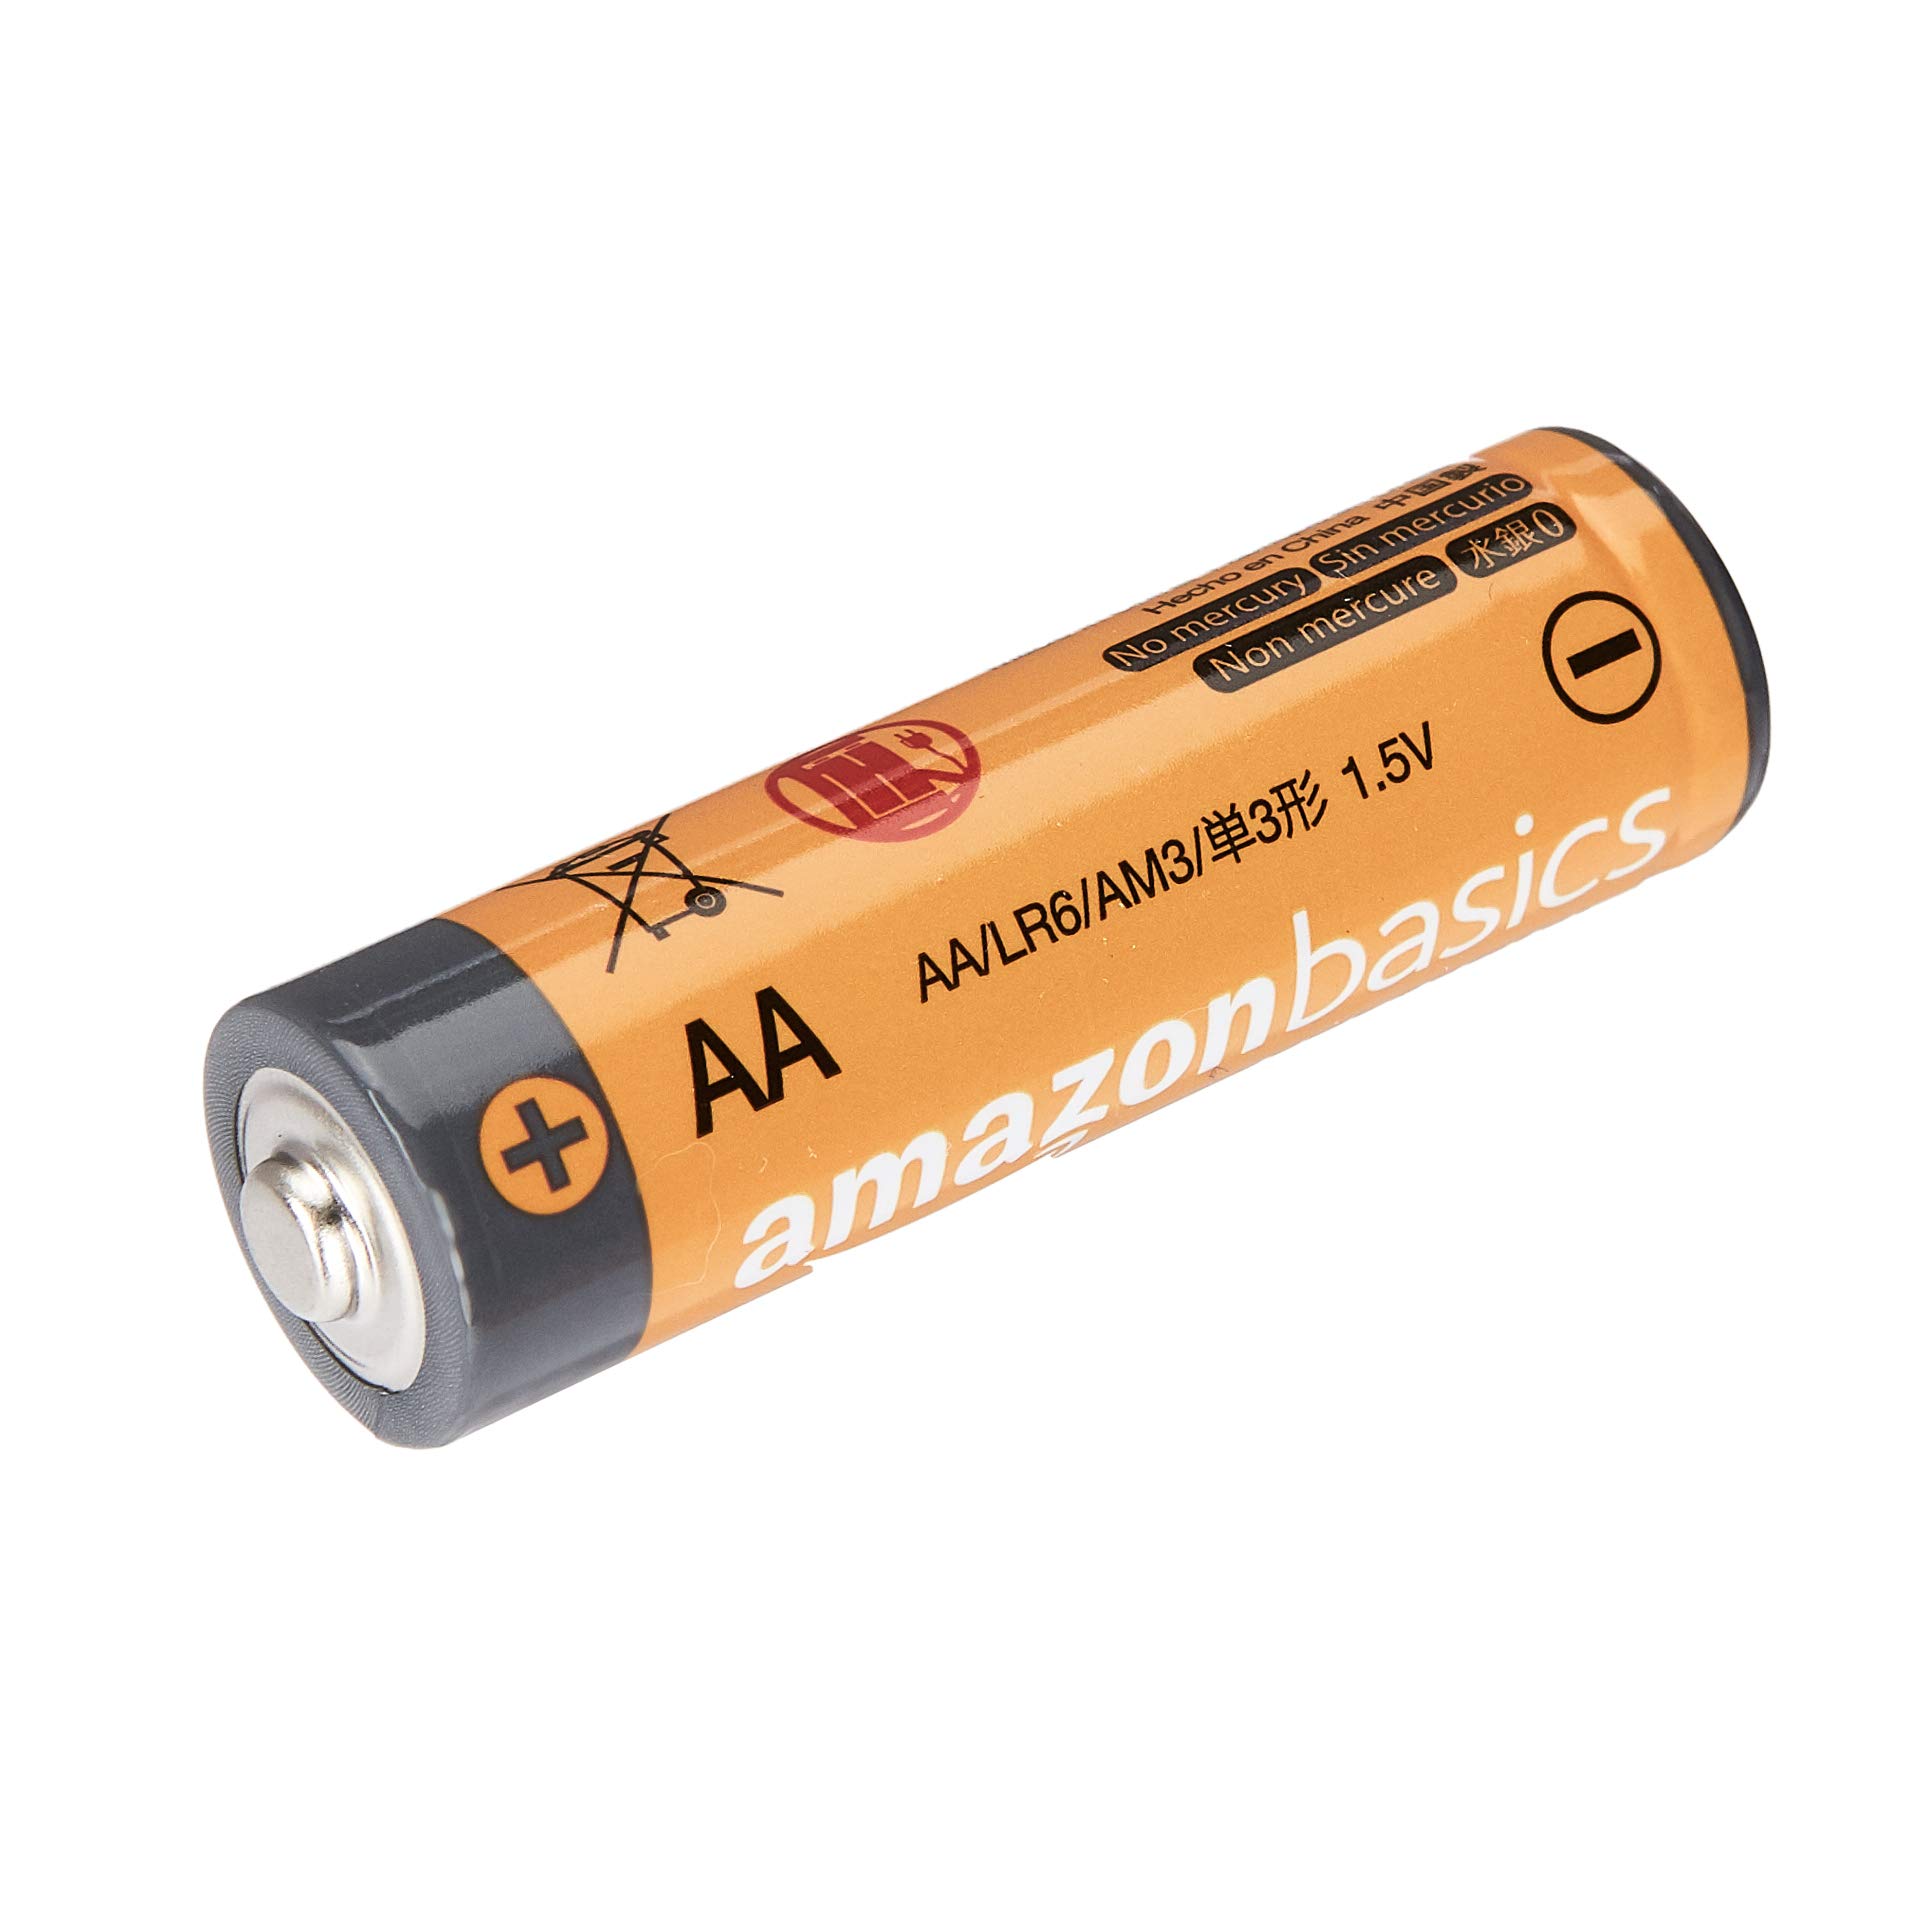 Amazon Basics 12-Pack AA Alkaline High-Performance Batteries, 1.5 Volt, 10-Year Shelf Life